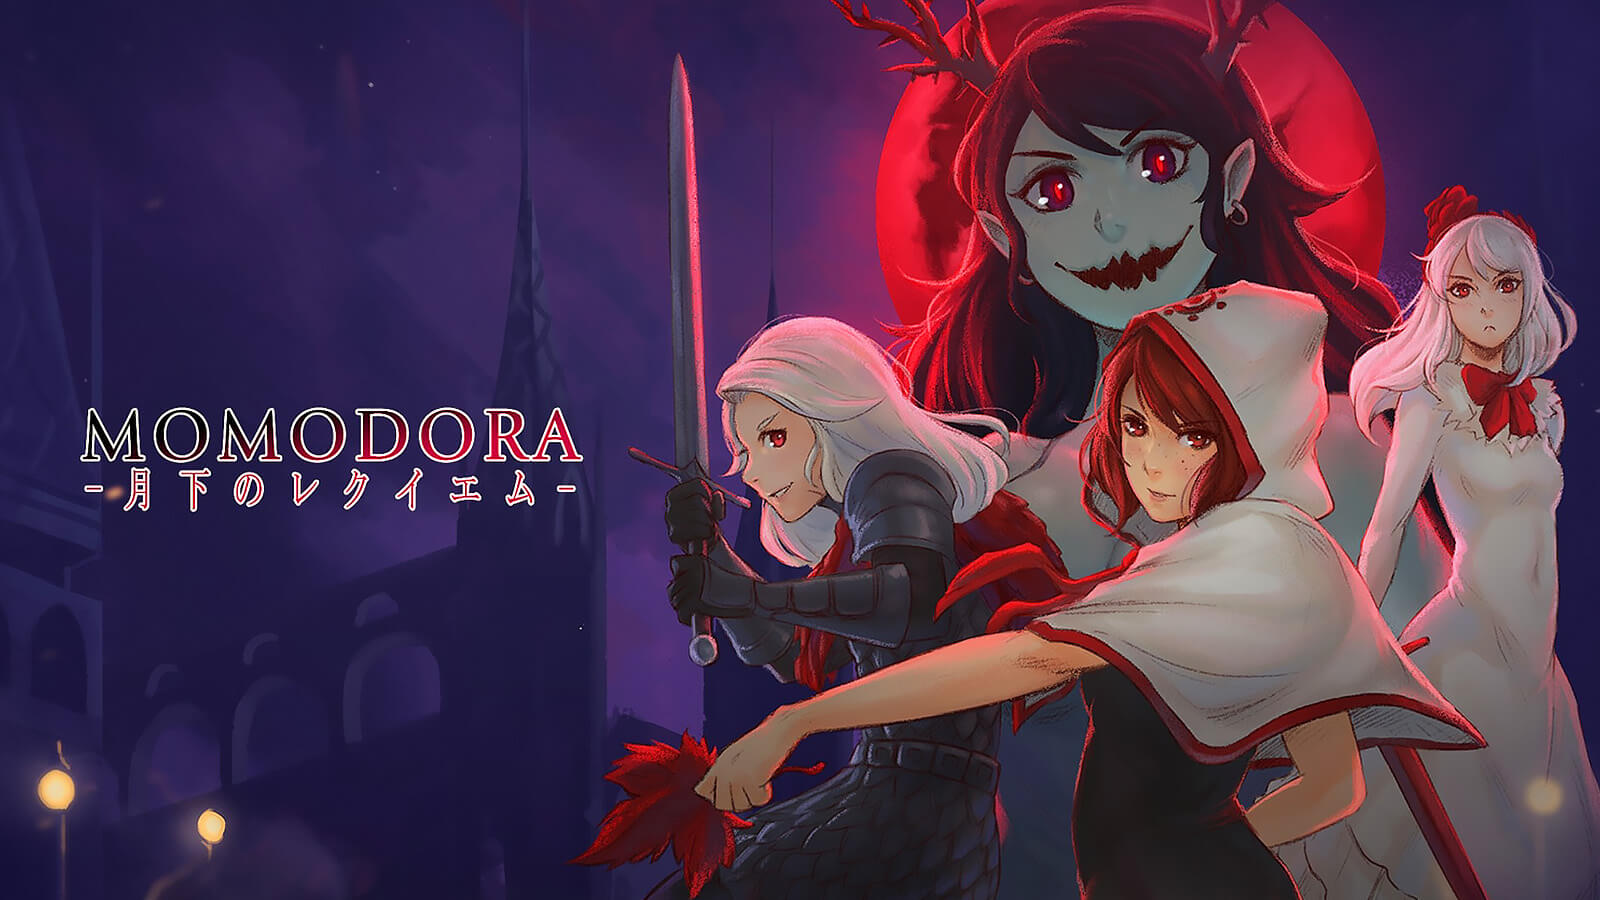 Momodora: Reverie Under the Moonlight promo art for PS4 version